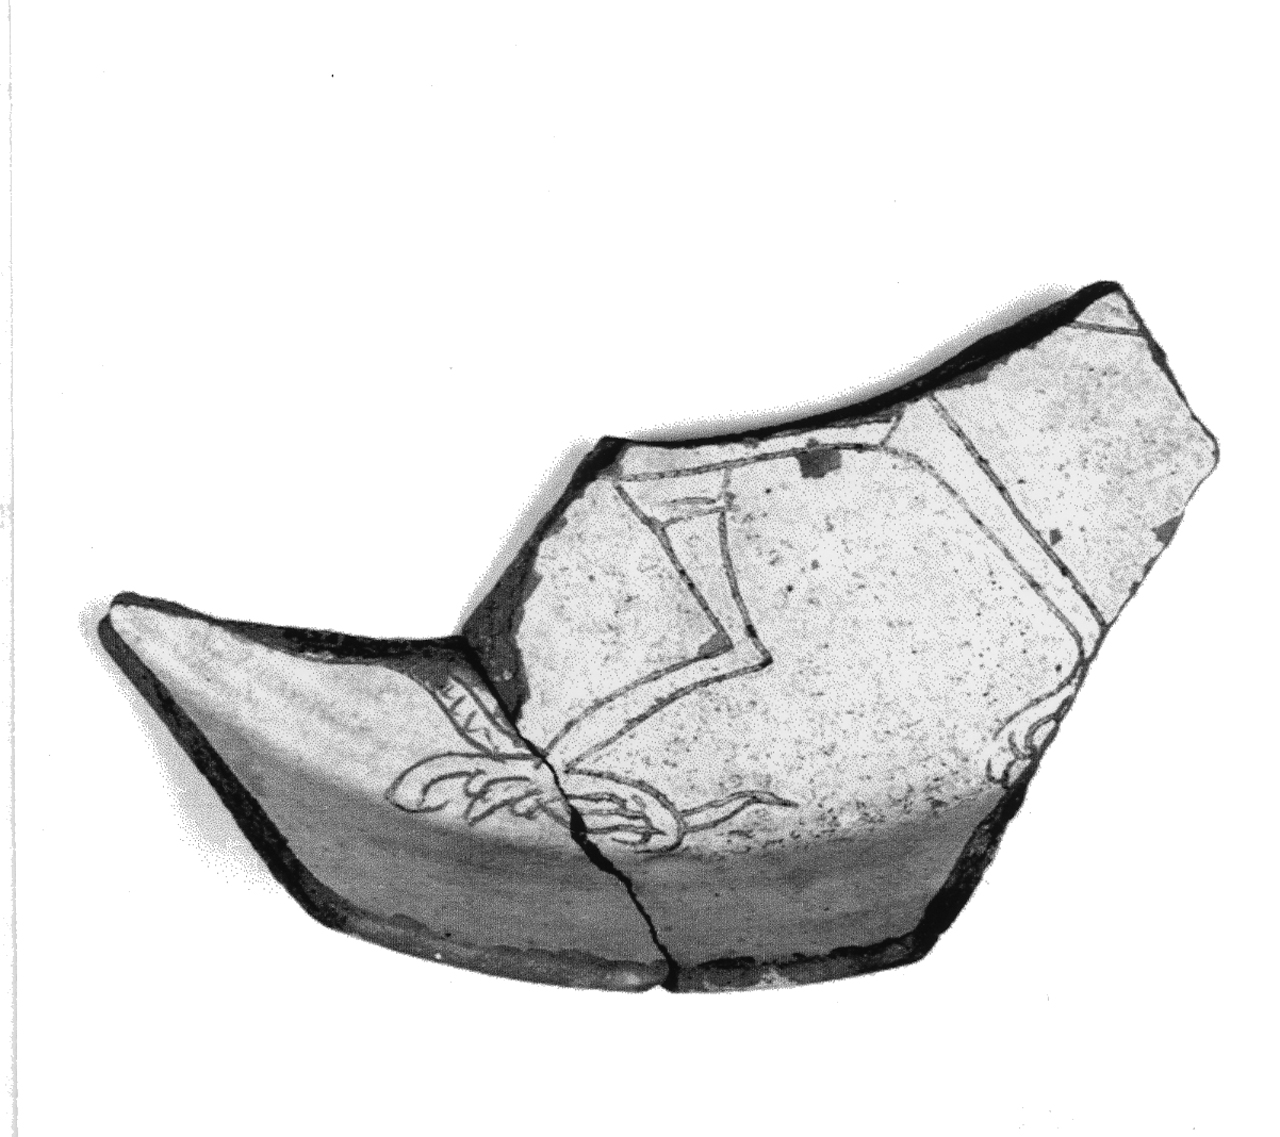 parete di bacino - manifattura veneta (inizio sec. XVI d.C)